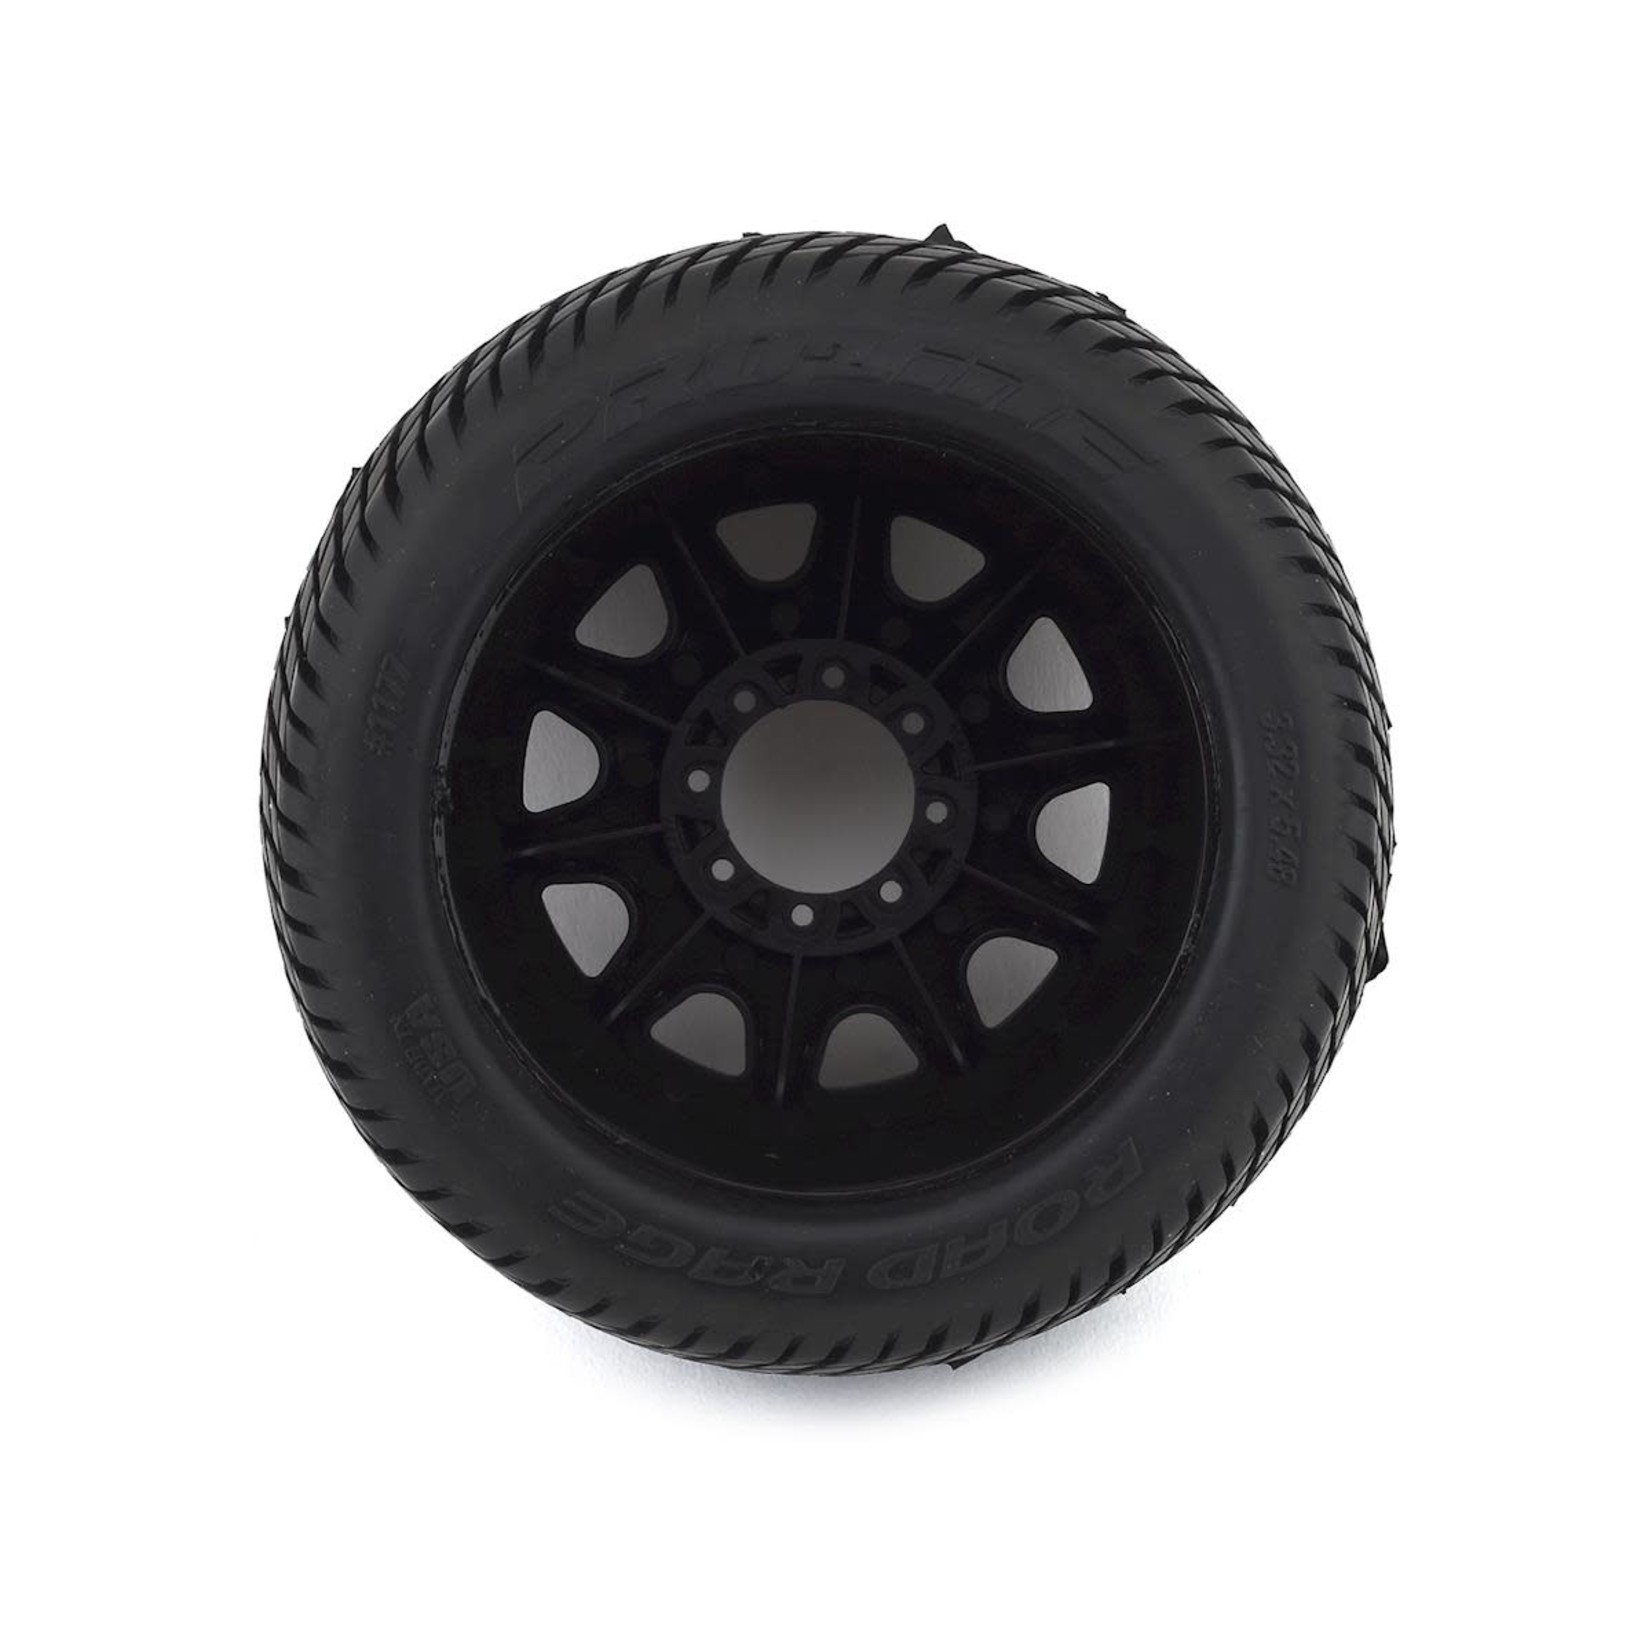 Pro-Line Pro-Line Road Rage MX38 3.8" Tire w/Raid 8x32 Wheels (2) (Black) (M2) w/Removable Hex #1177-10